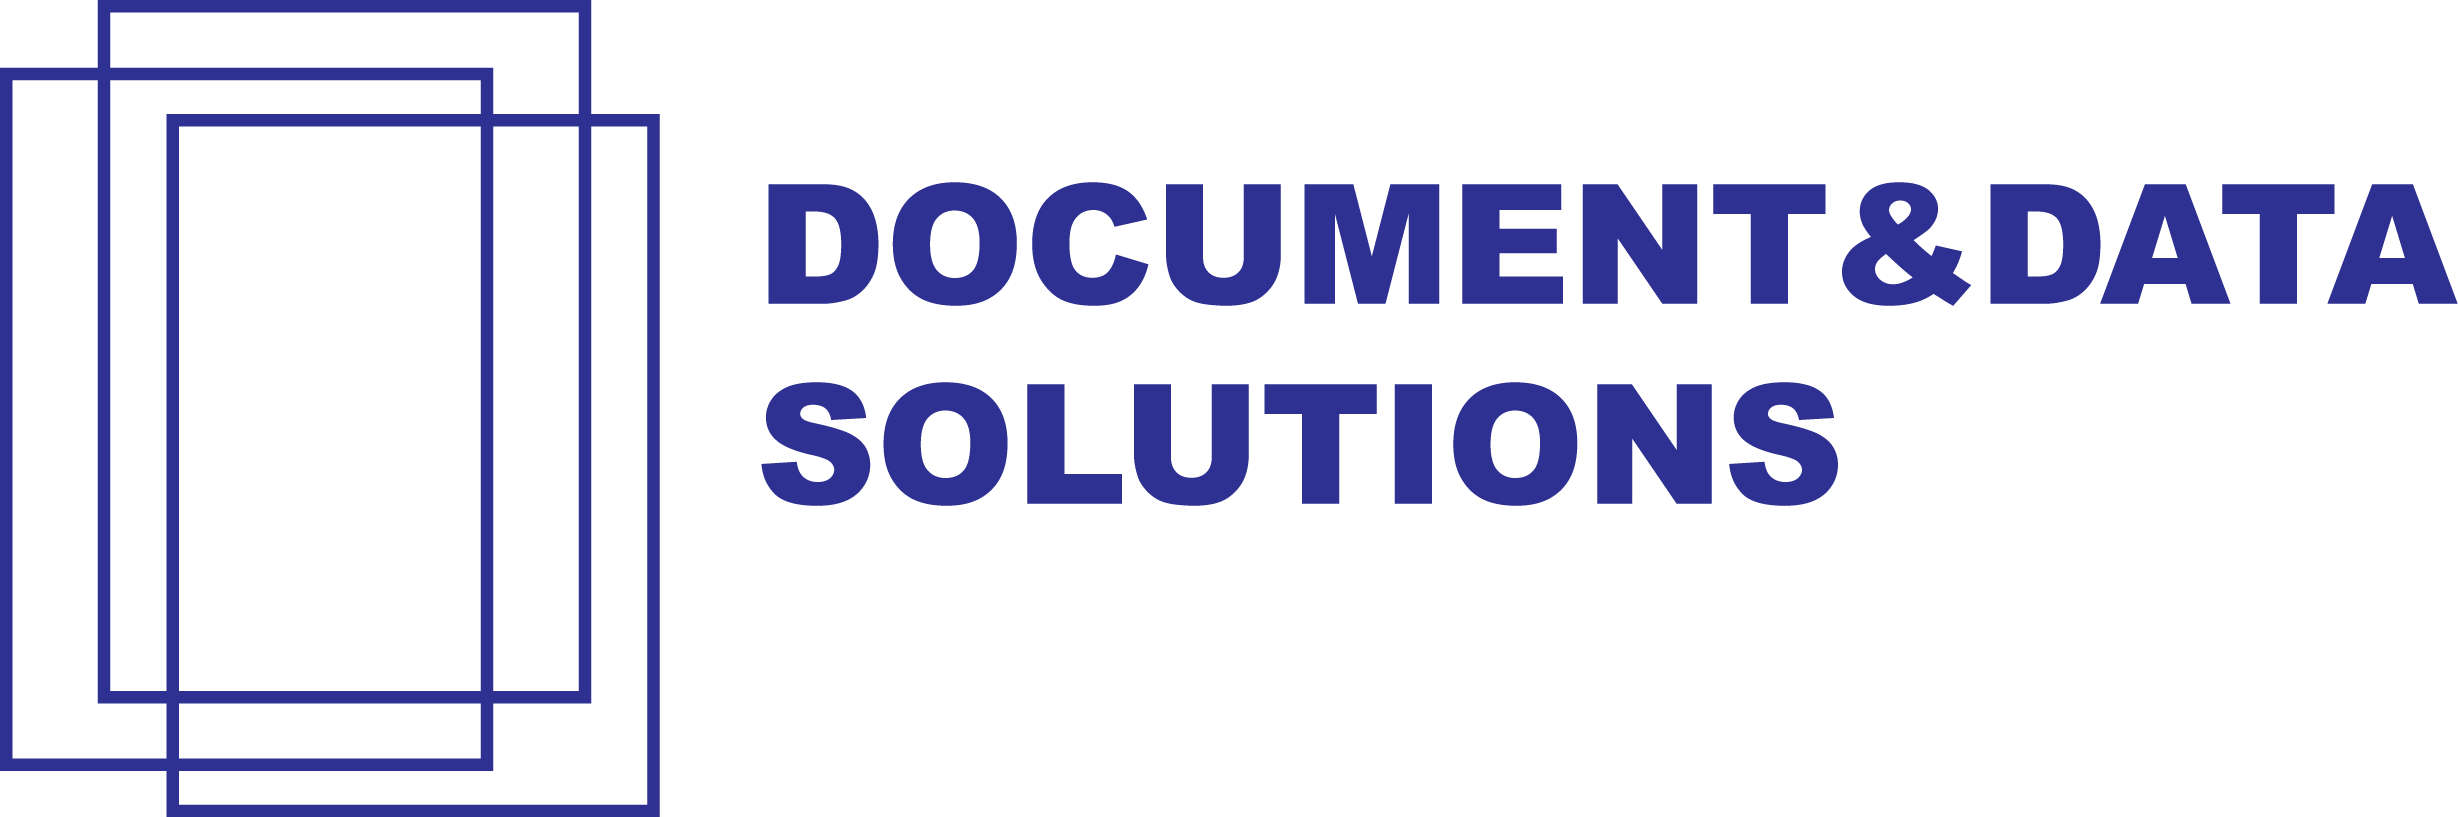 Document & Data Solutions logo